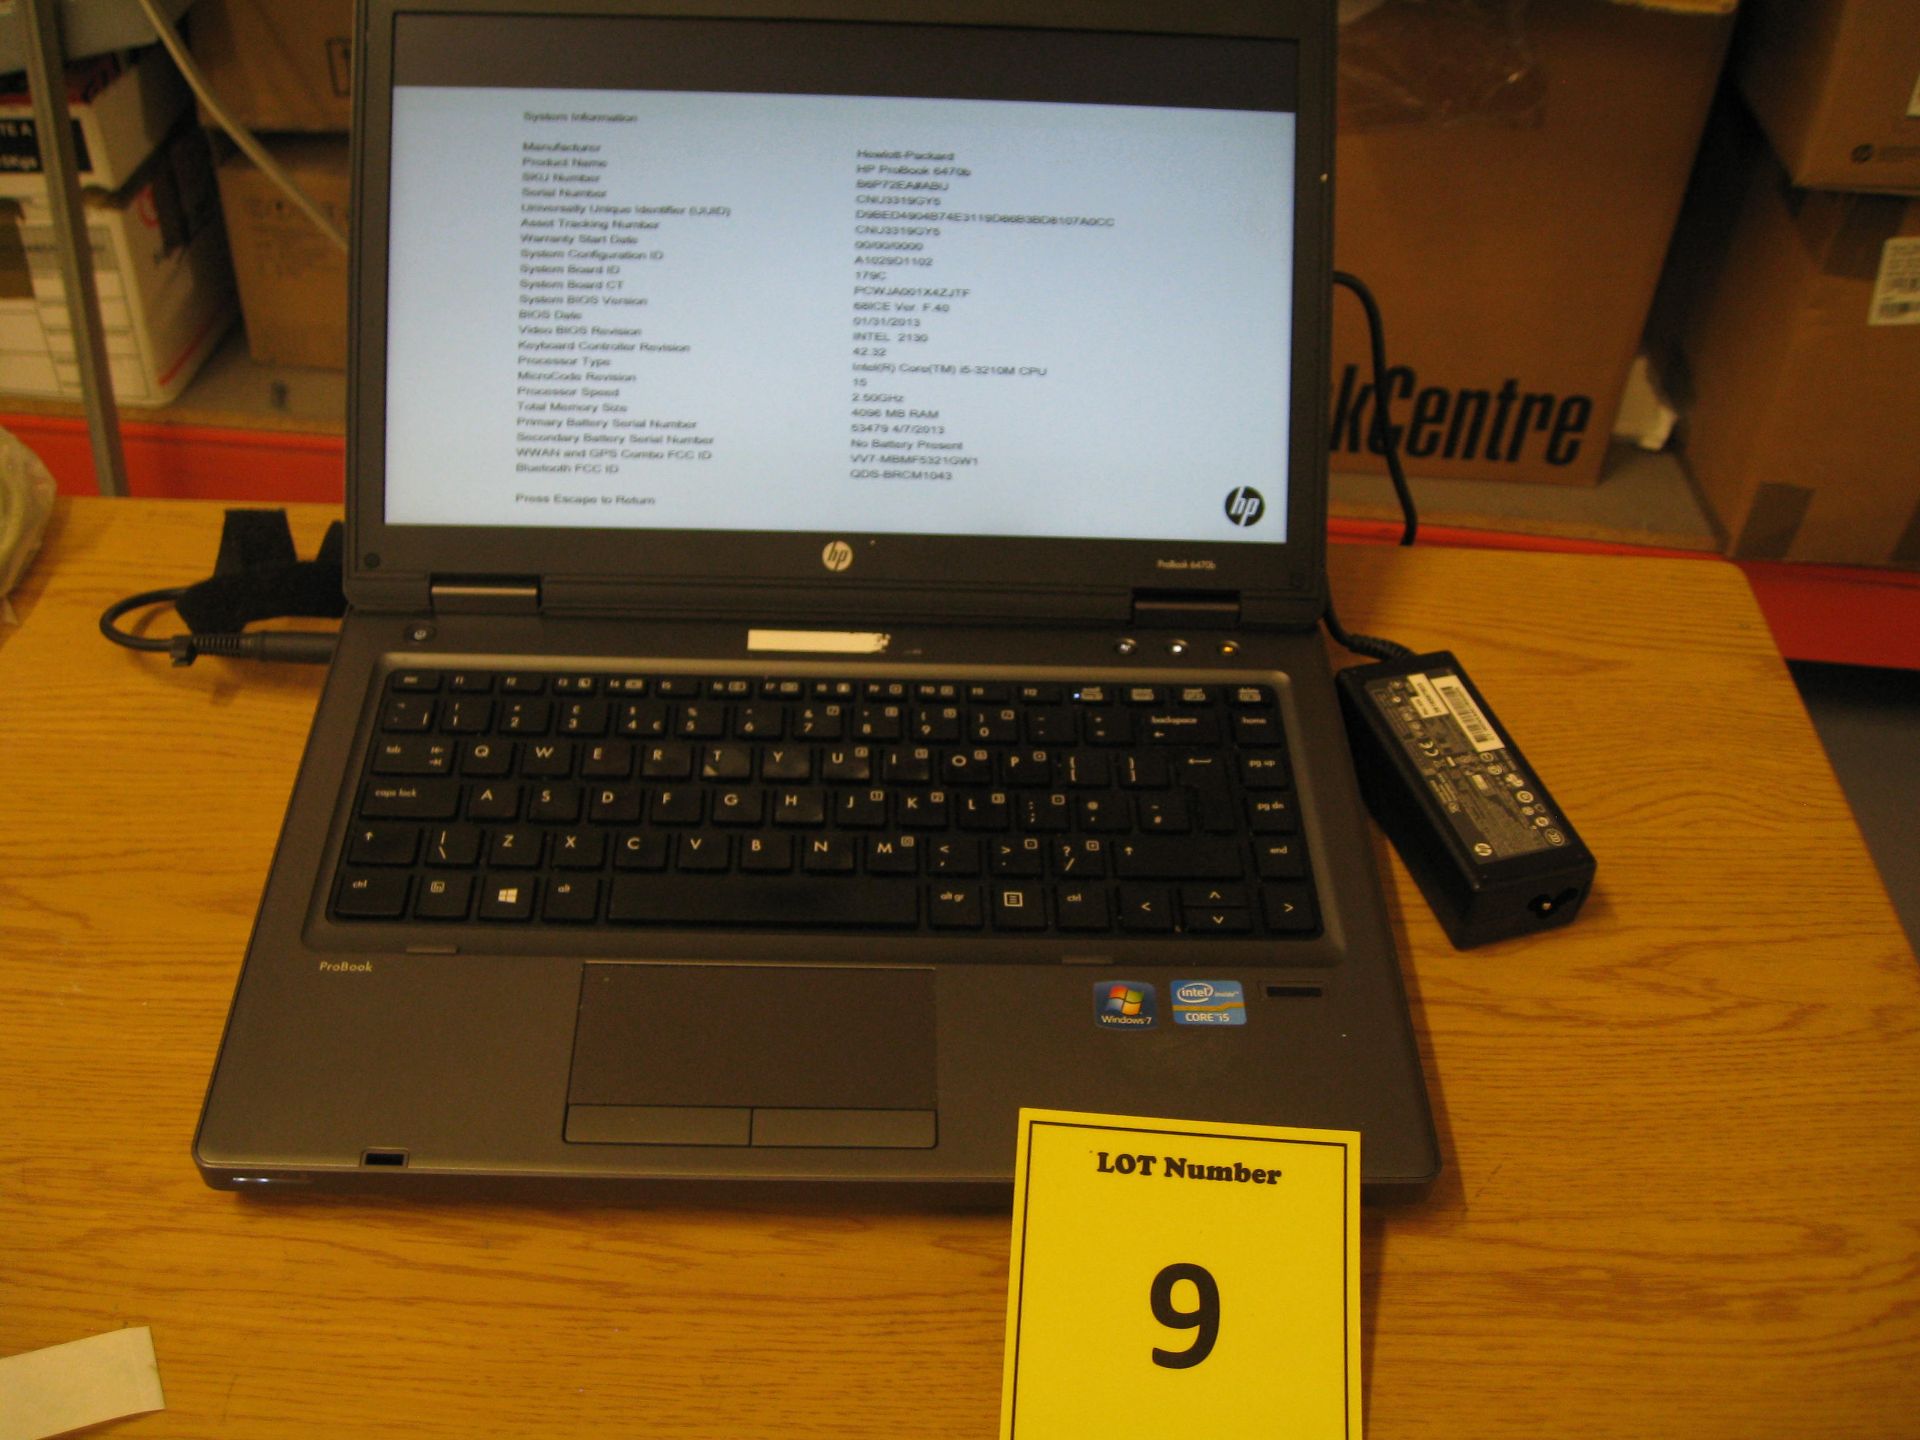 HP Probook 6470b Laptop, Core-i5/2.50GHZ, 4GB RAM/500 GB HDD, dvdrw, psu - Win 7 Pro. COA Tiny dint